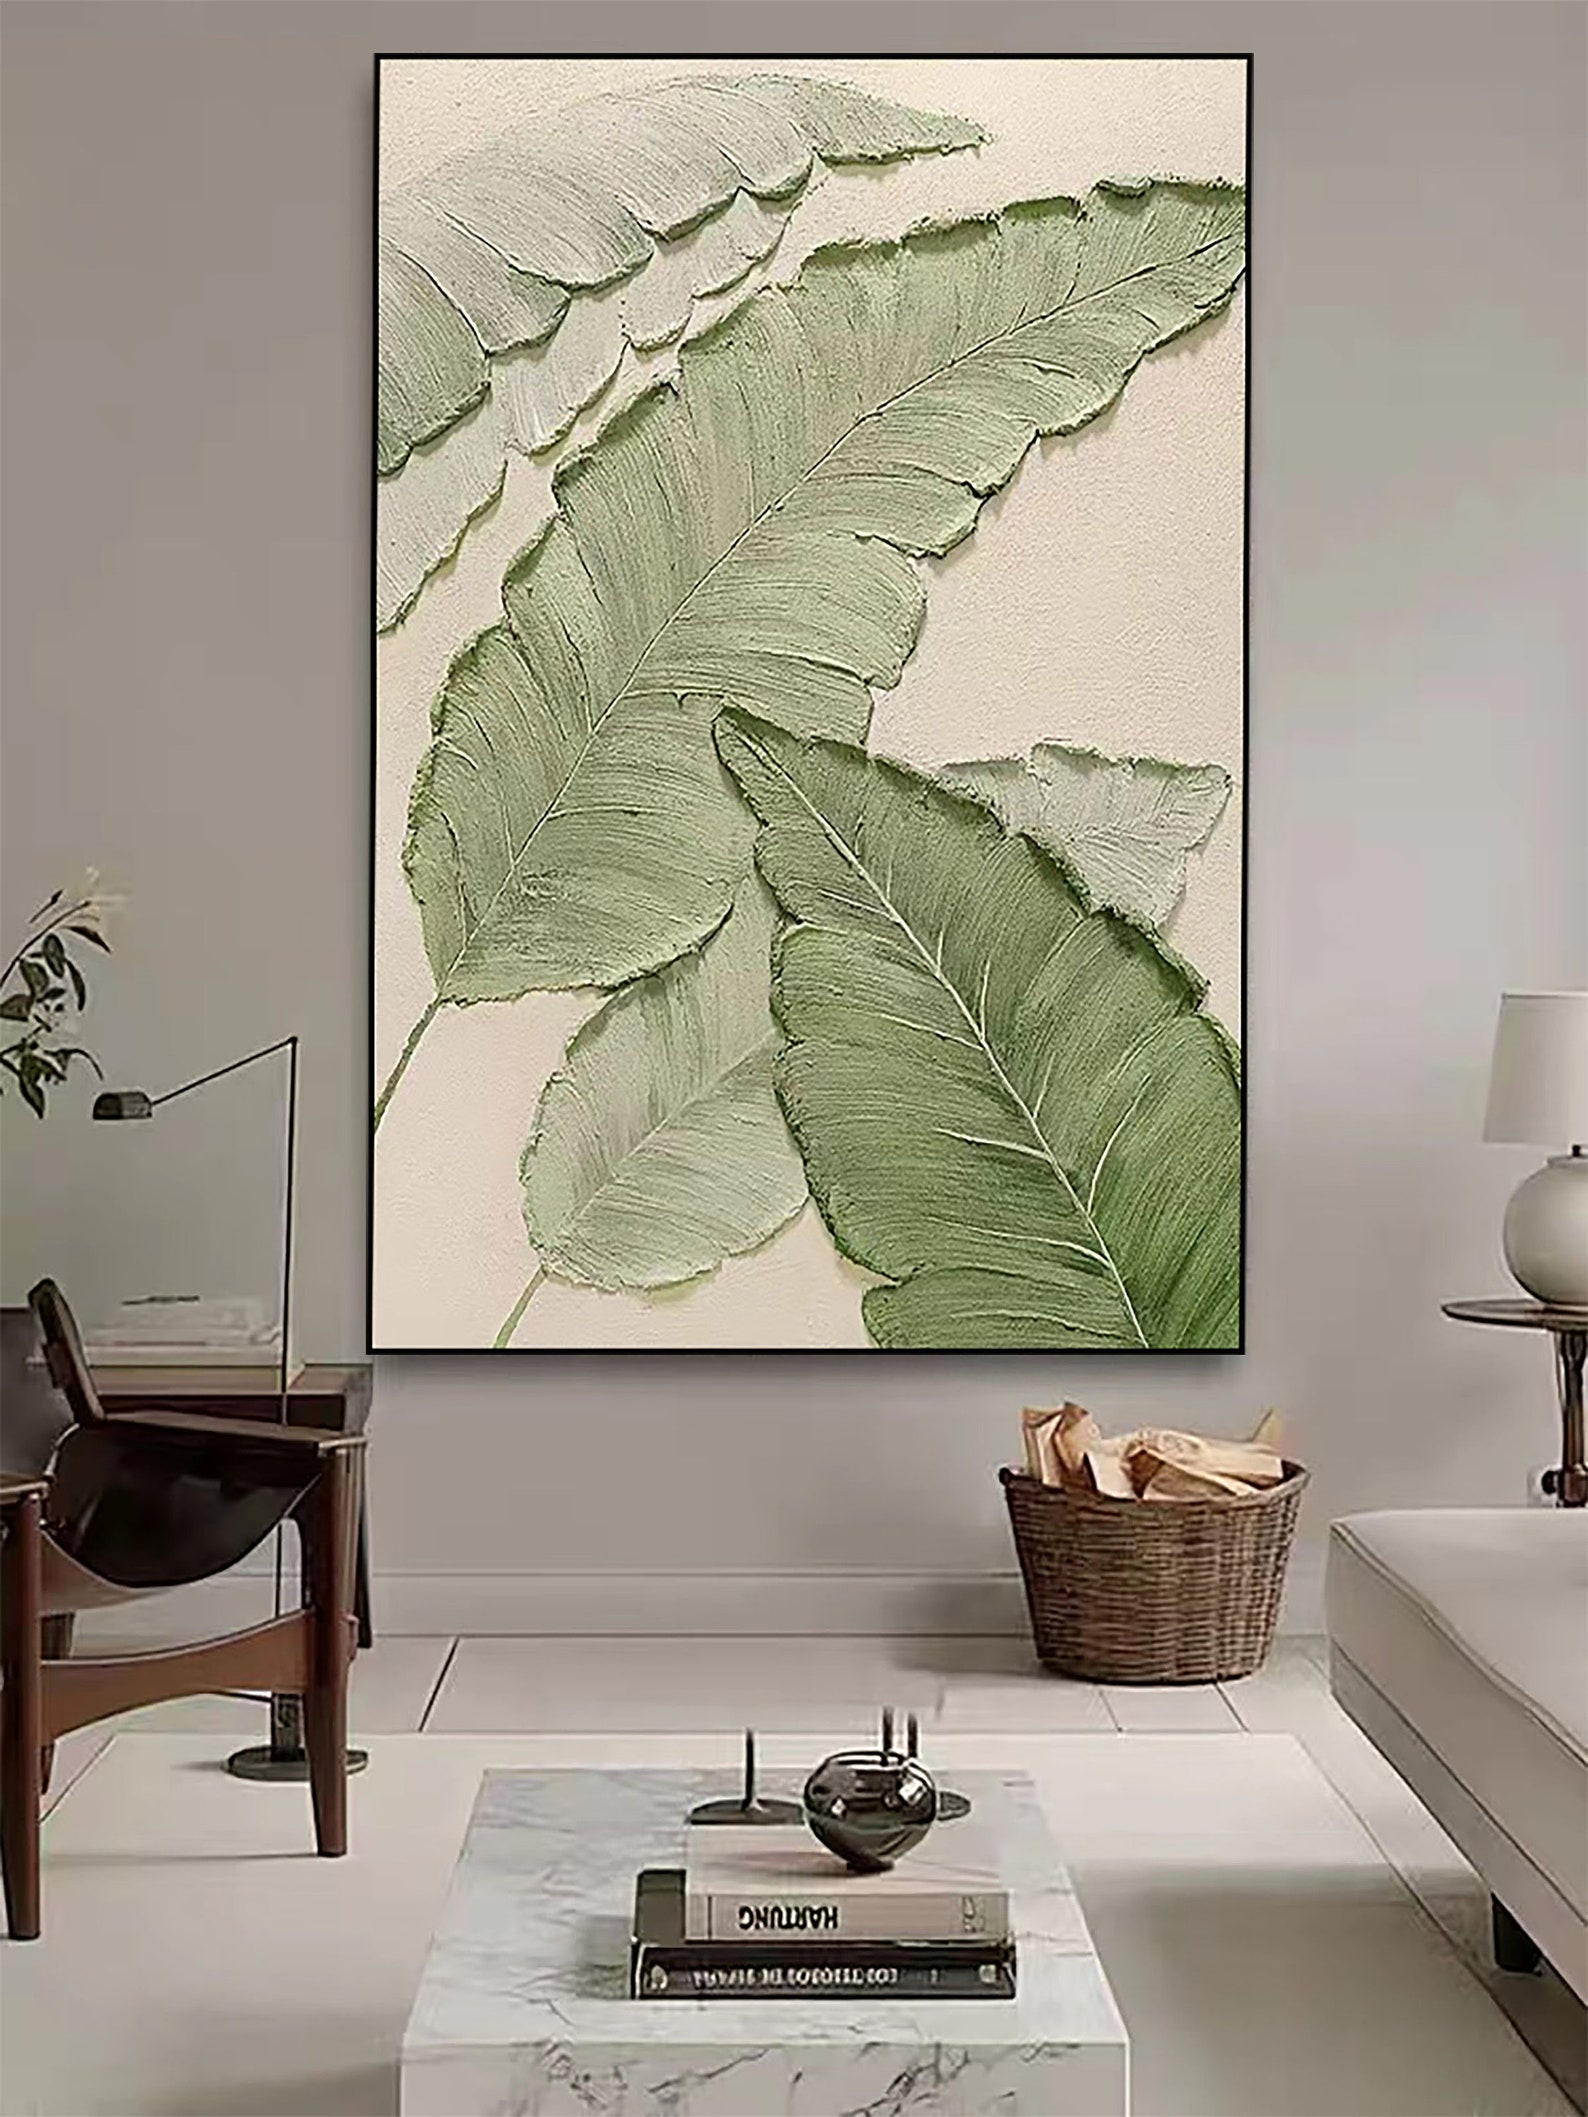 Idyllic Green Leaves Oil Painting Large Original Modern Gold Flower ...